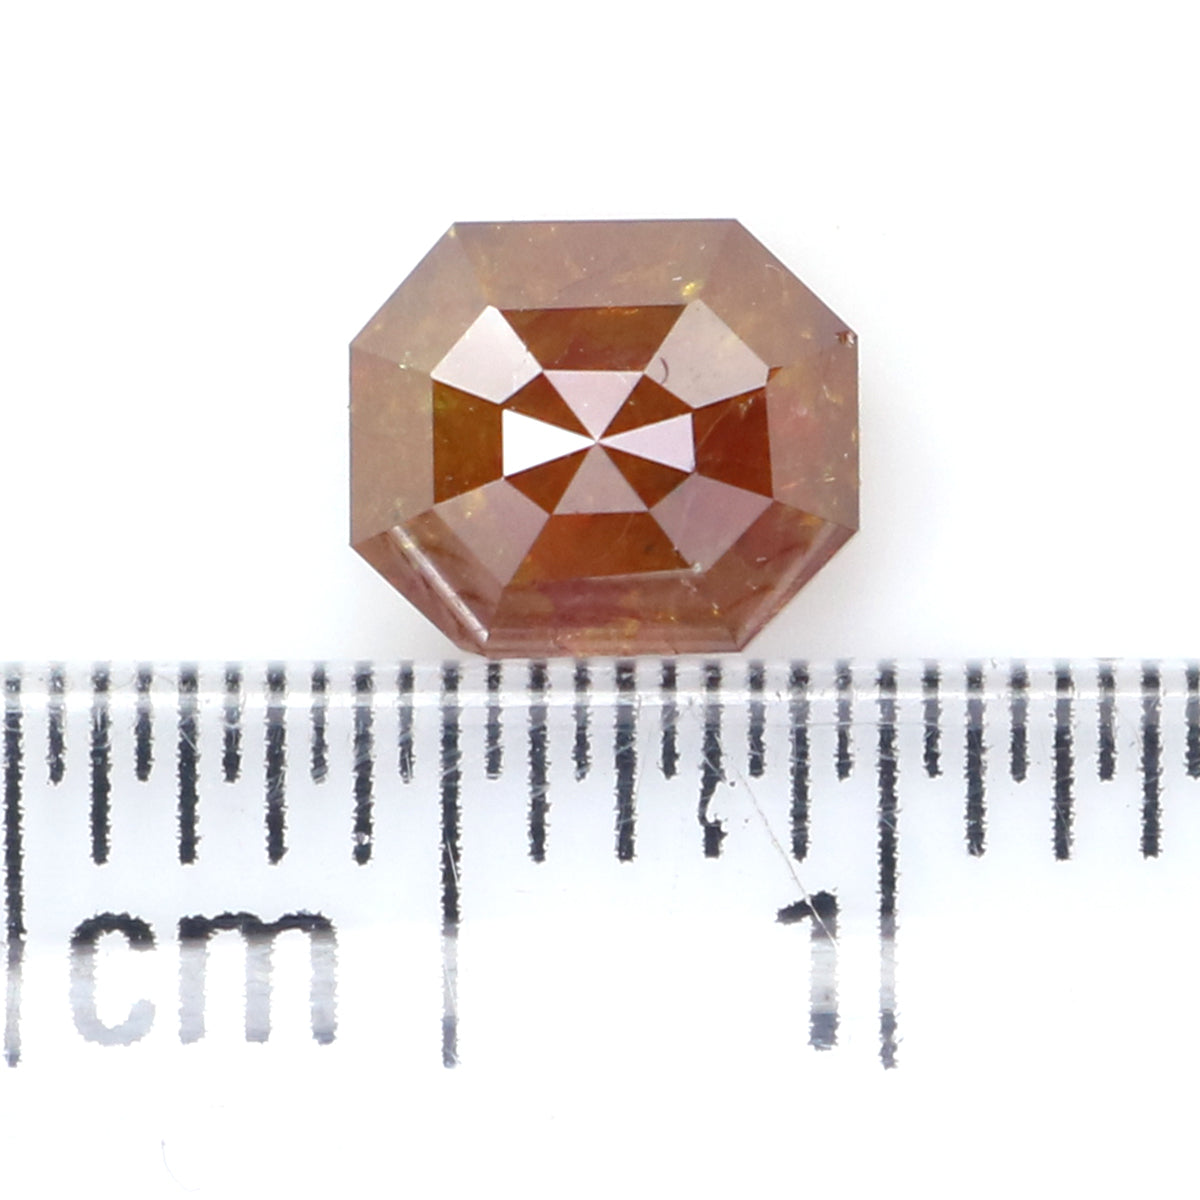 0.94 CT Natural Loose Emerald Shape Diamond Brown Color Emerald Diamond 5.85 MM Natural Loose Brown Emerald Shape Rose Cut Diamond LQ9192